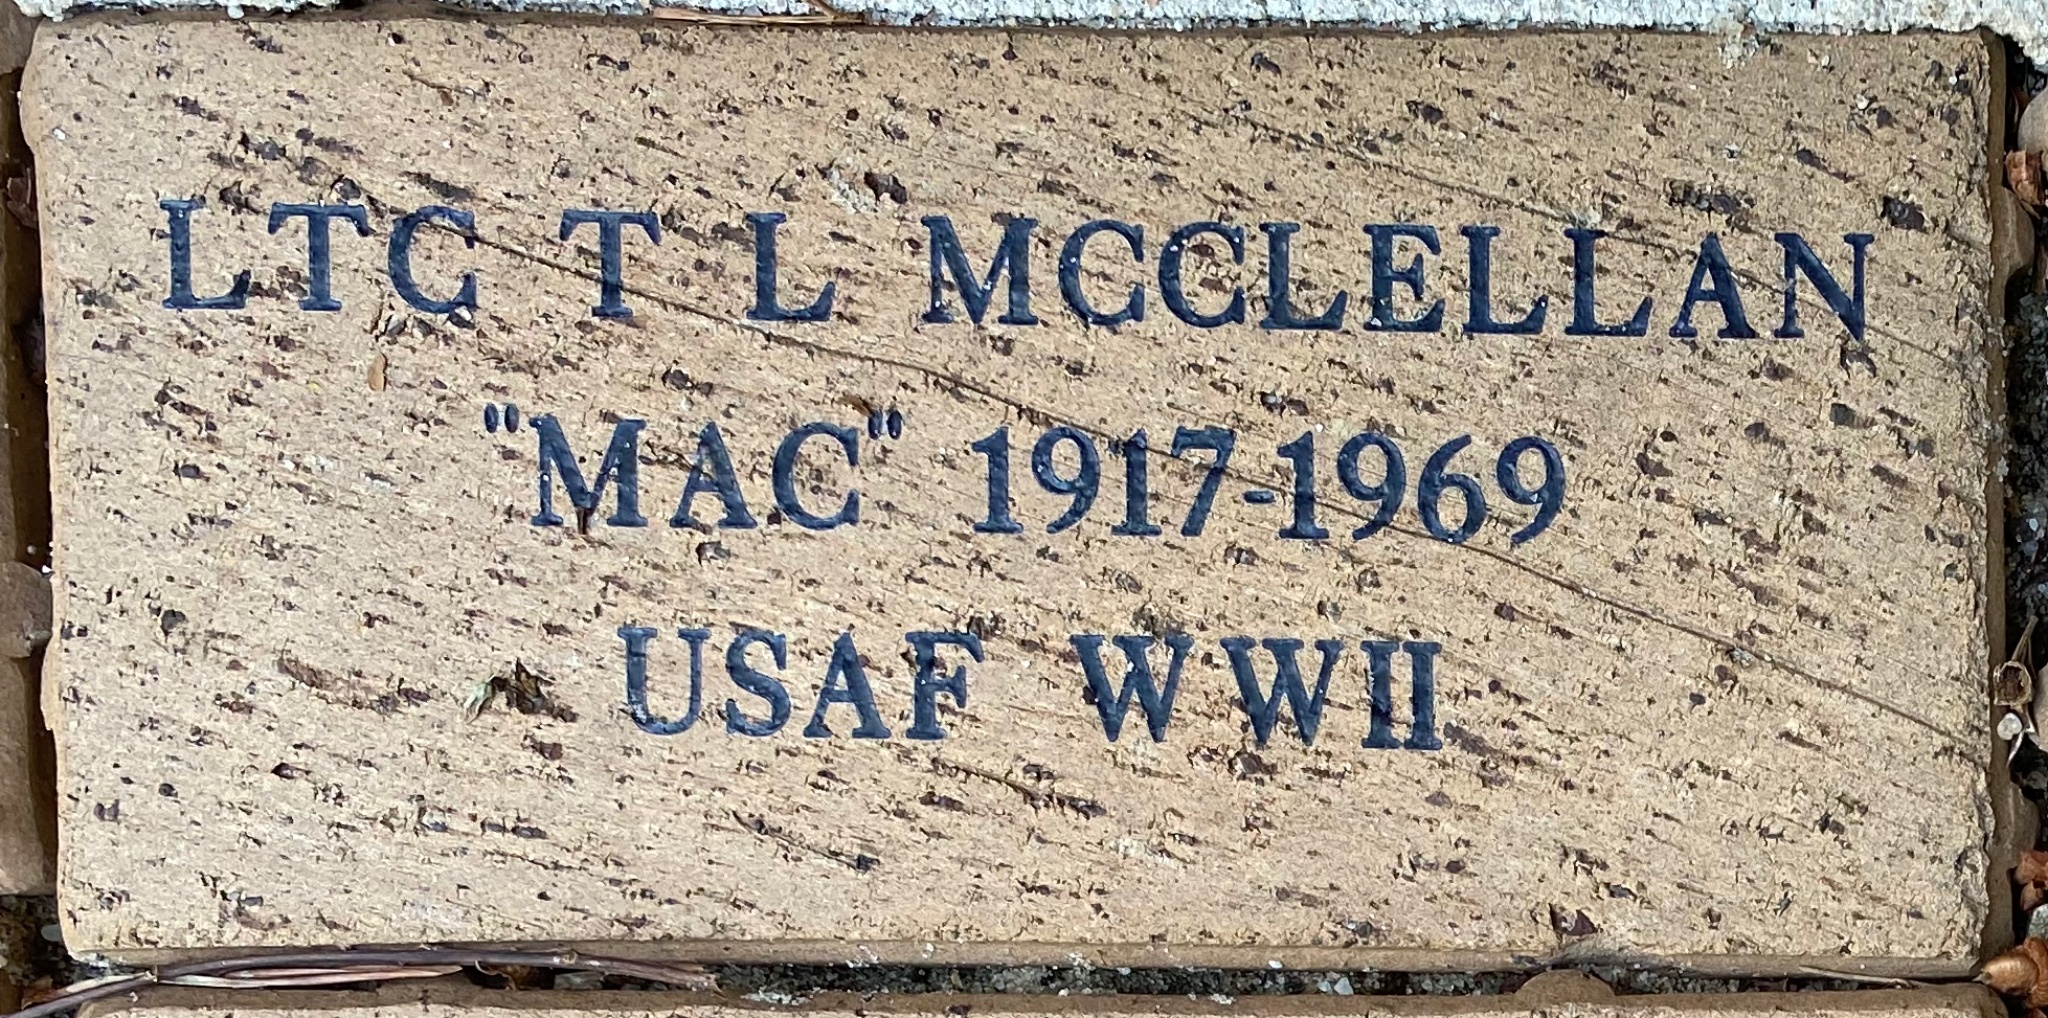 LTC T L MCCLELLAN “MAC” 1917-1969 USAF WWII